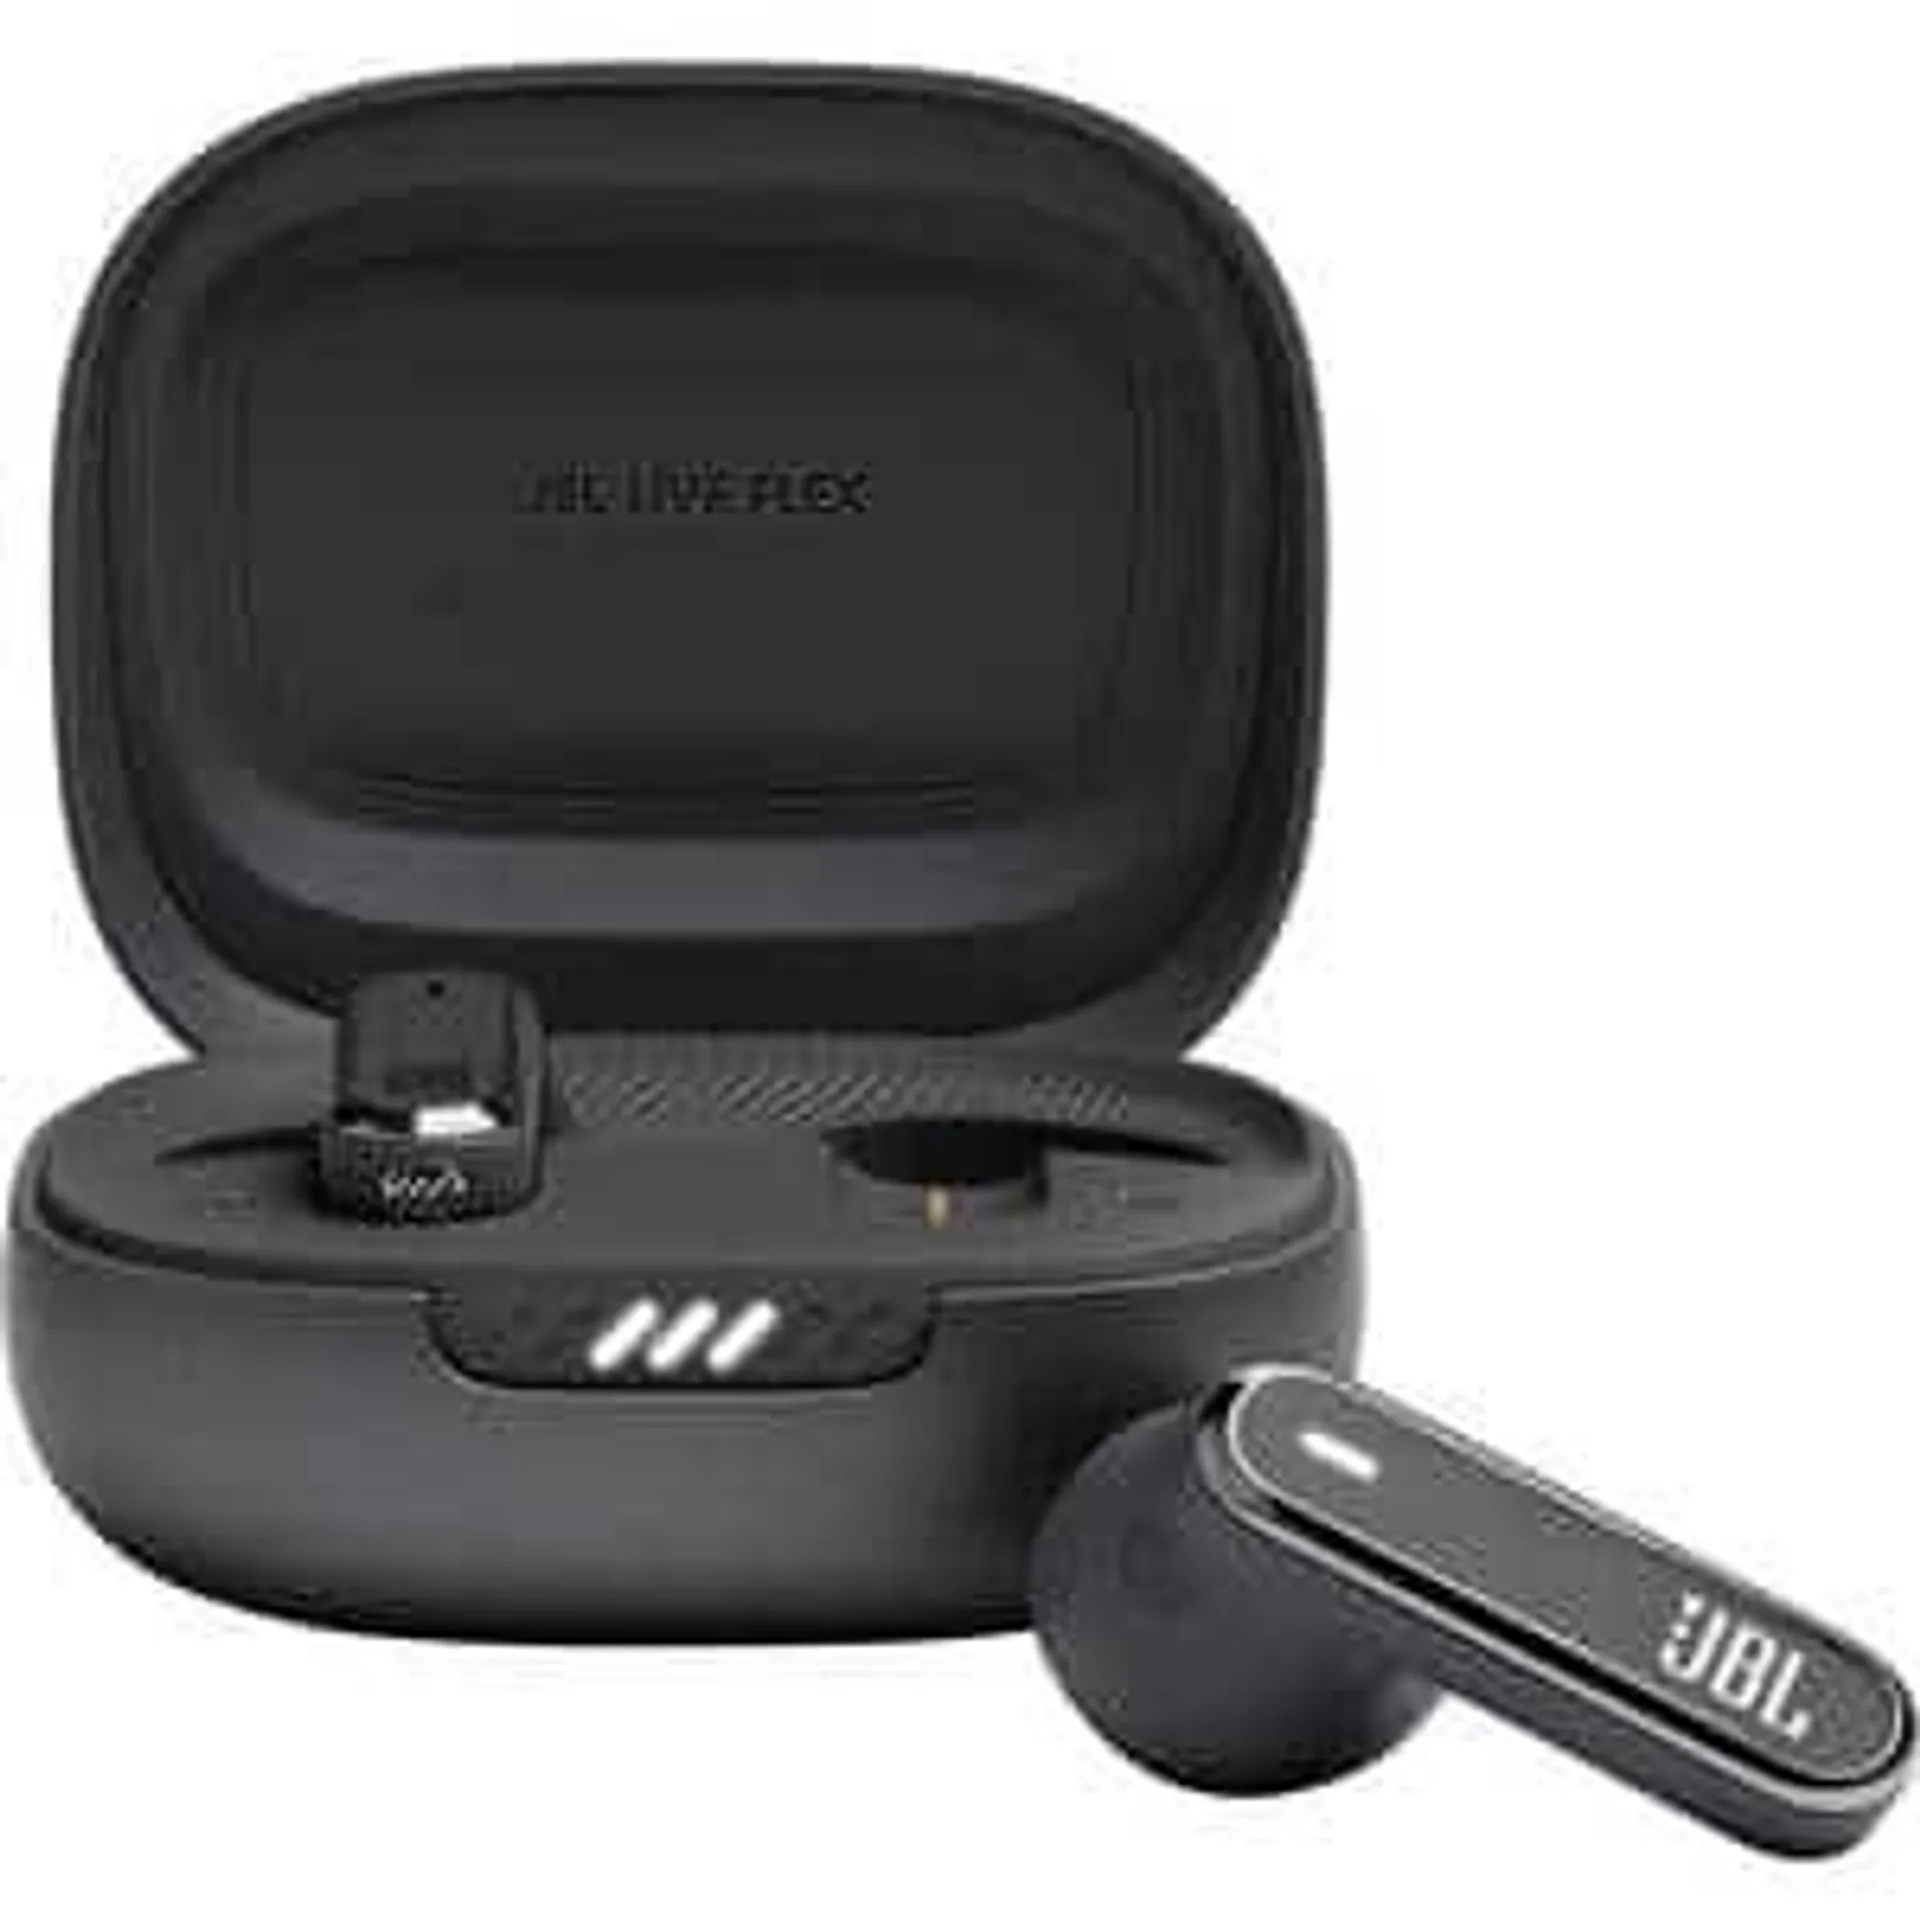 Casti JBL Live Flex, True wireless, Bluetooth, In-ear, Microfon, Carcasa incarcare wireless, Noise cancelling, negru